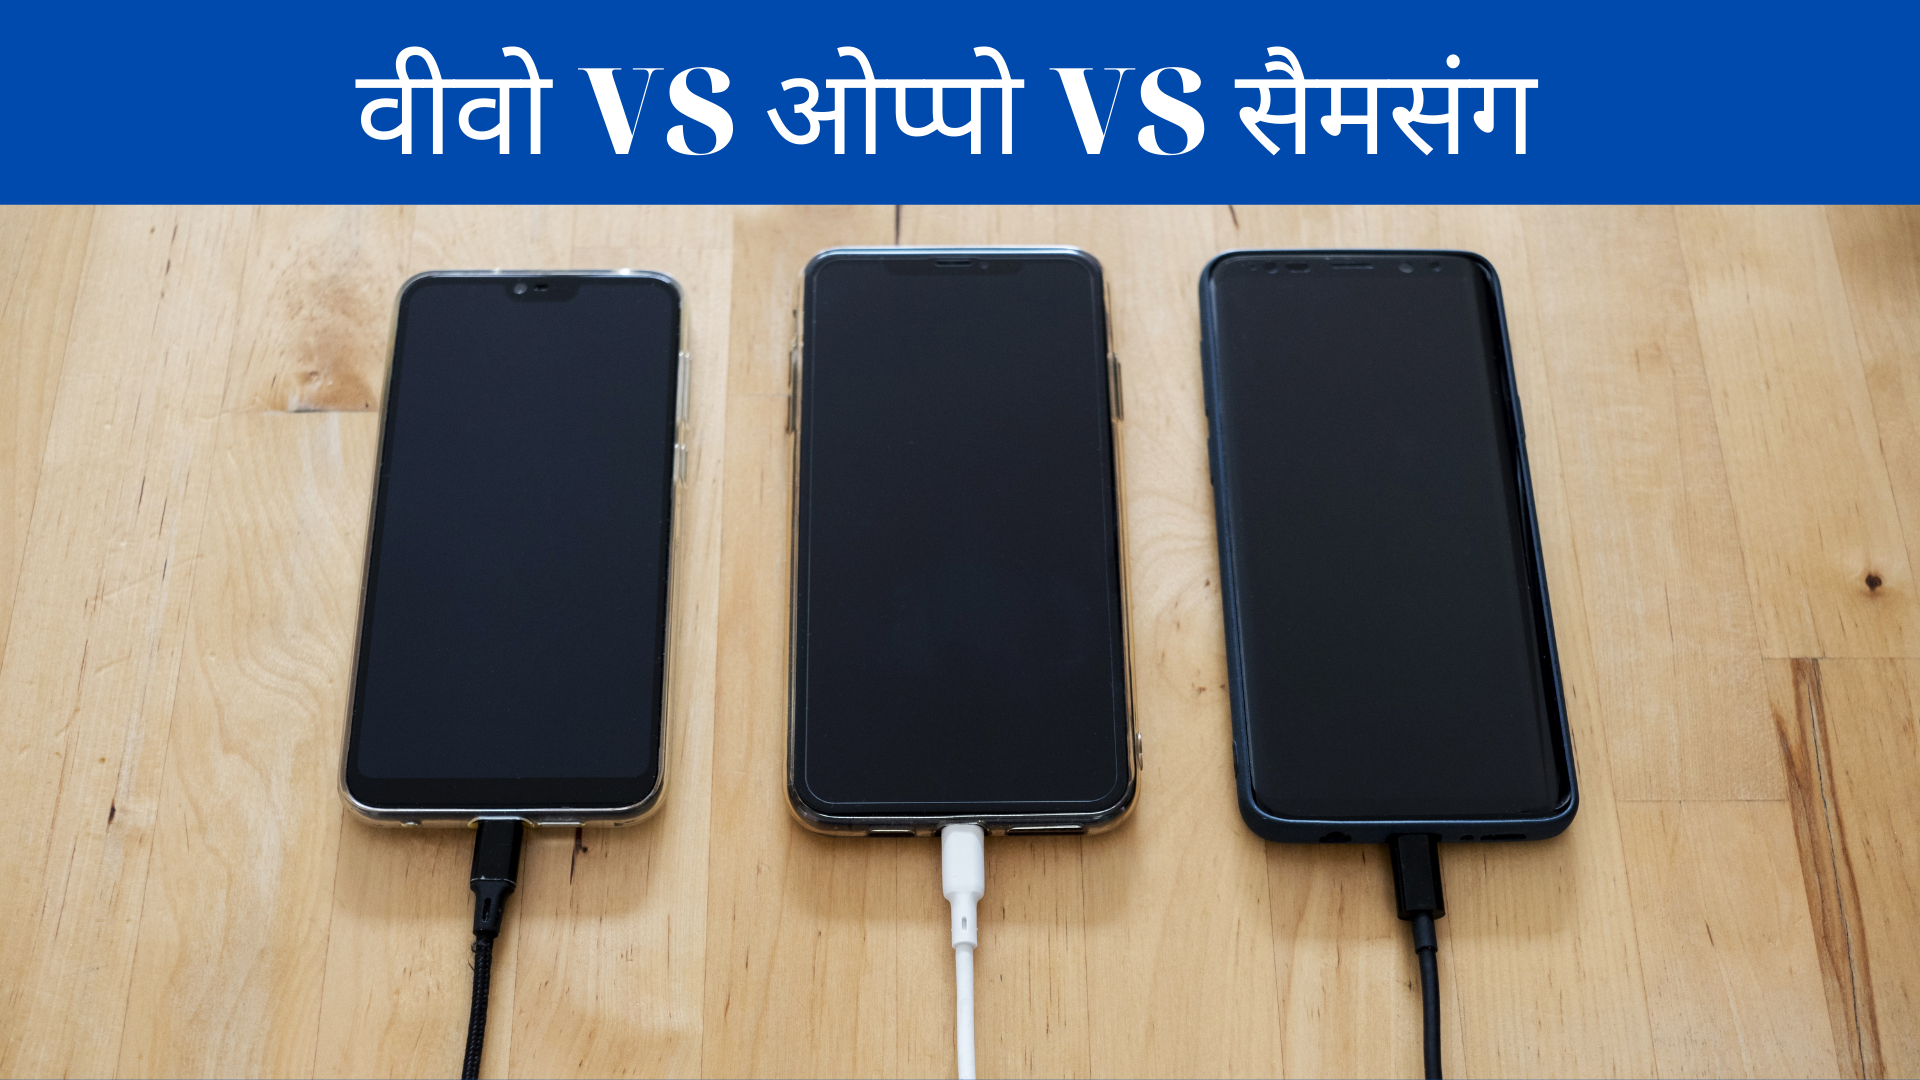 वीवो मोबाइल VS ओप्पो VS सैमसंग कौन सा?